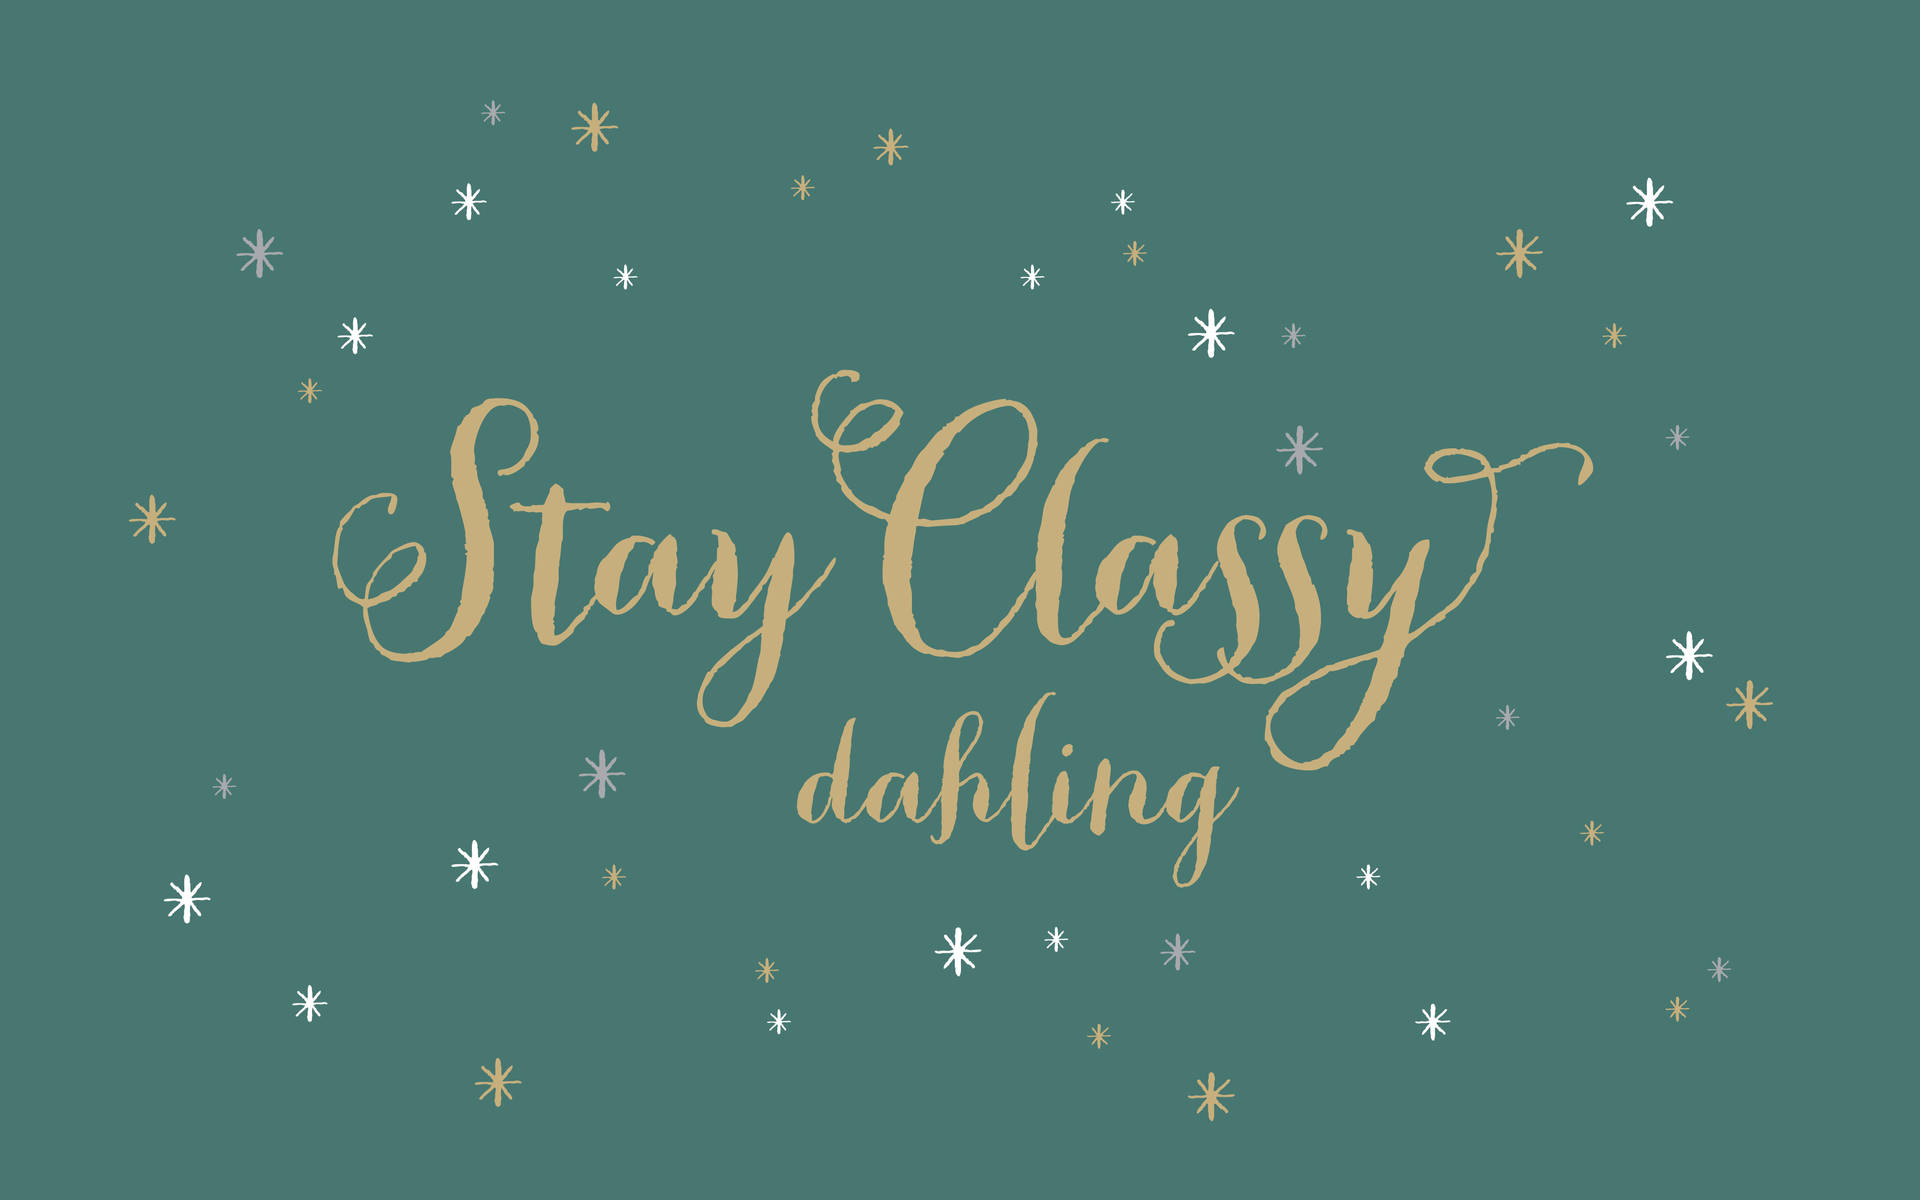 Stay Classy Darling Inspirational Desktop